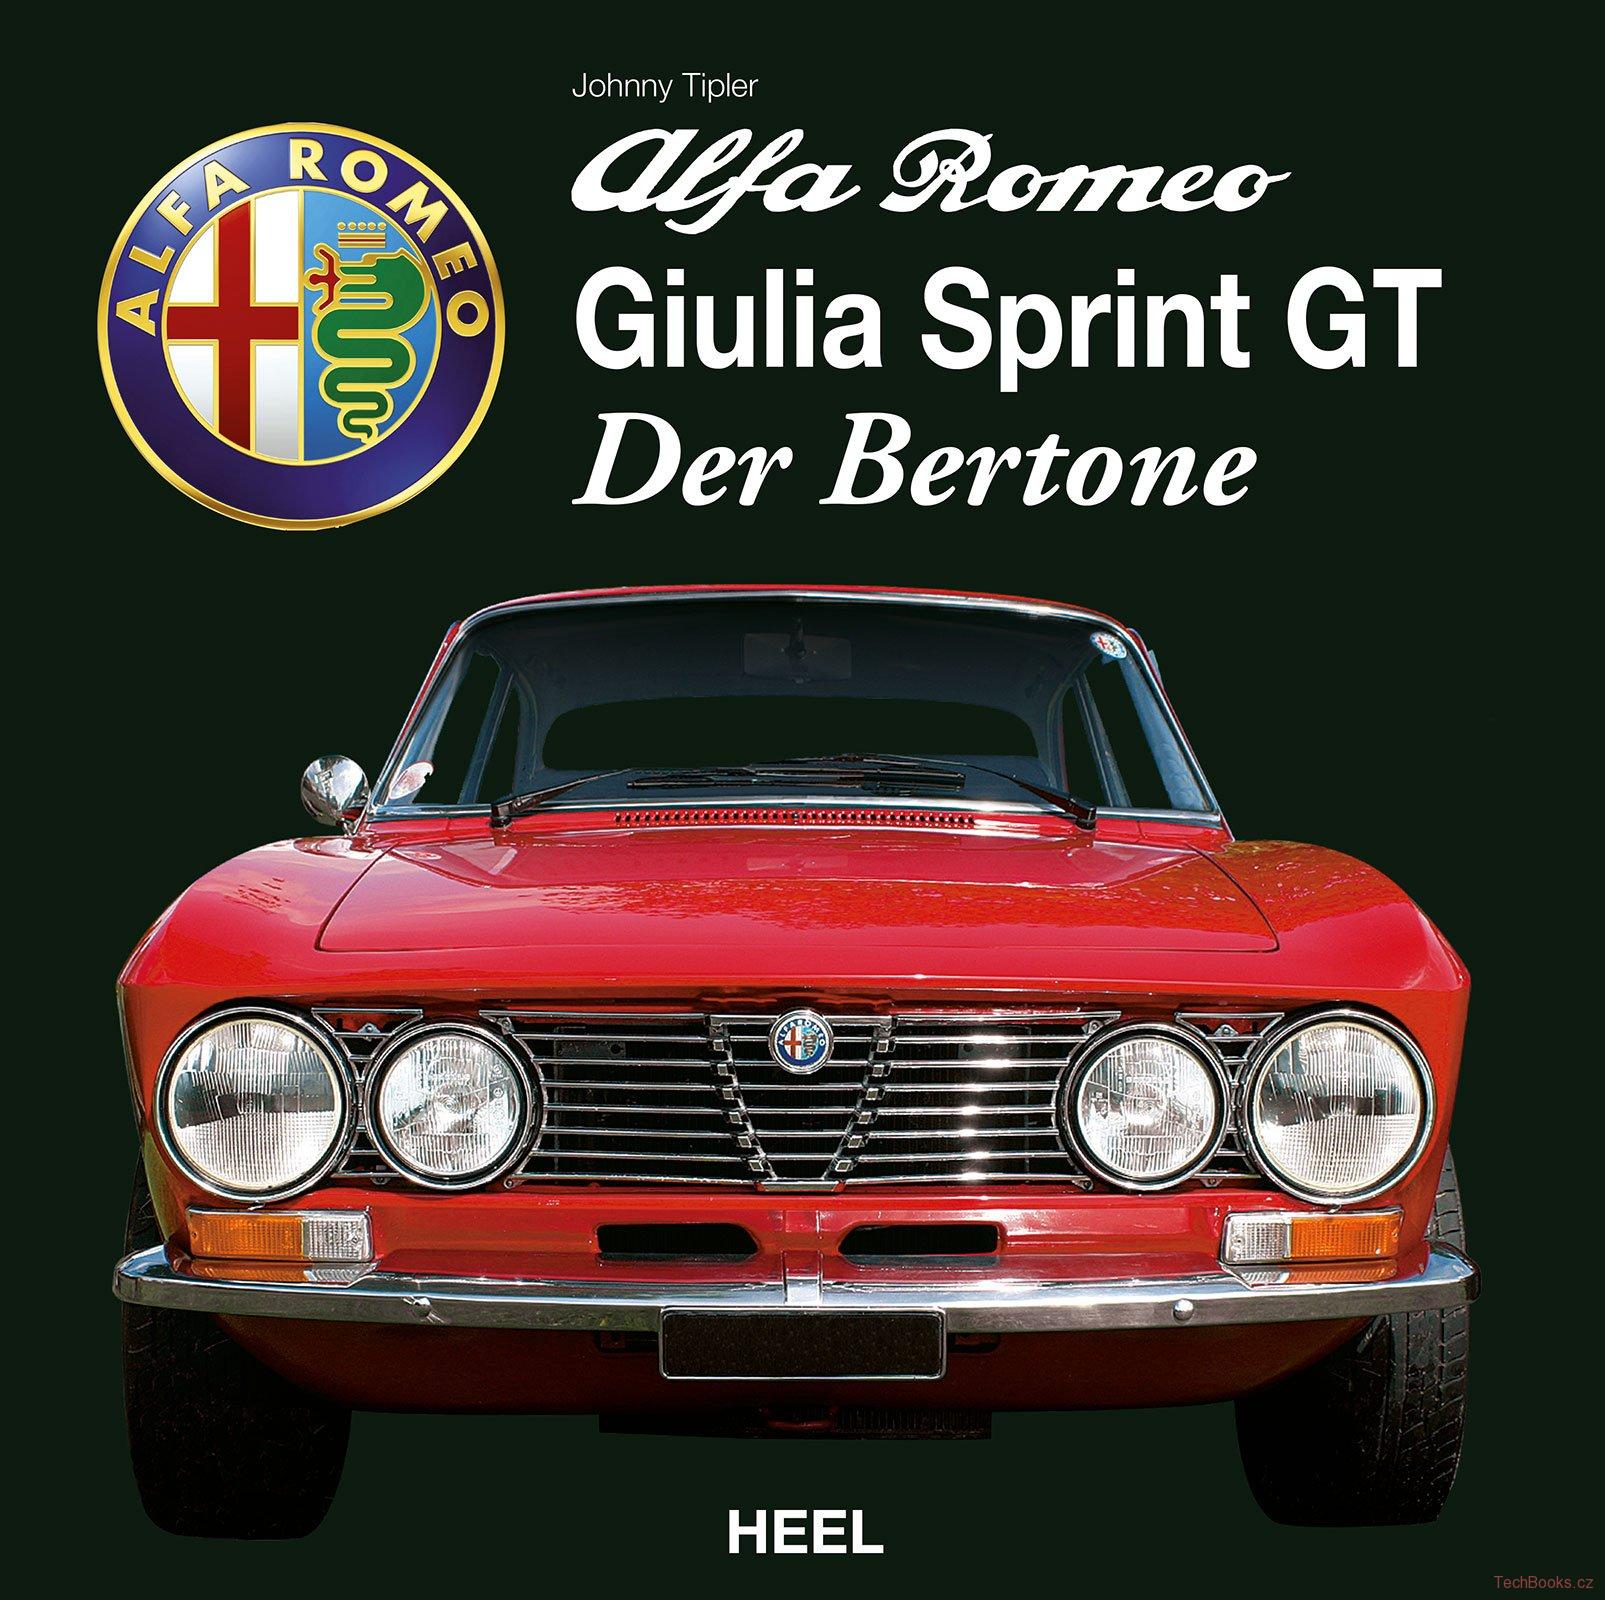 Alfa Romeo Giulia Sprint GT